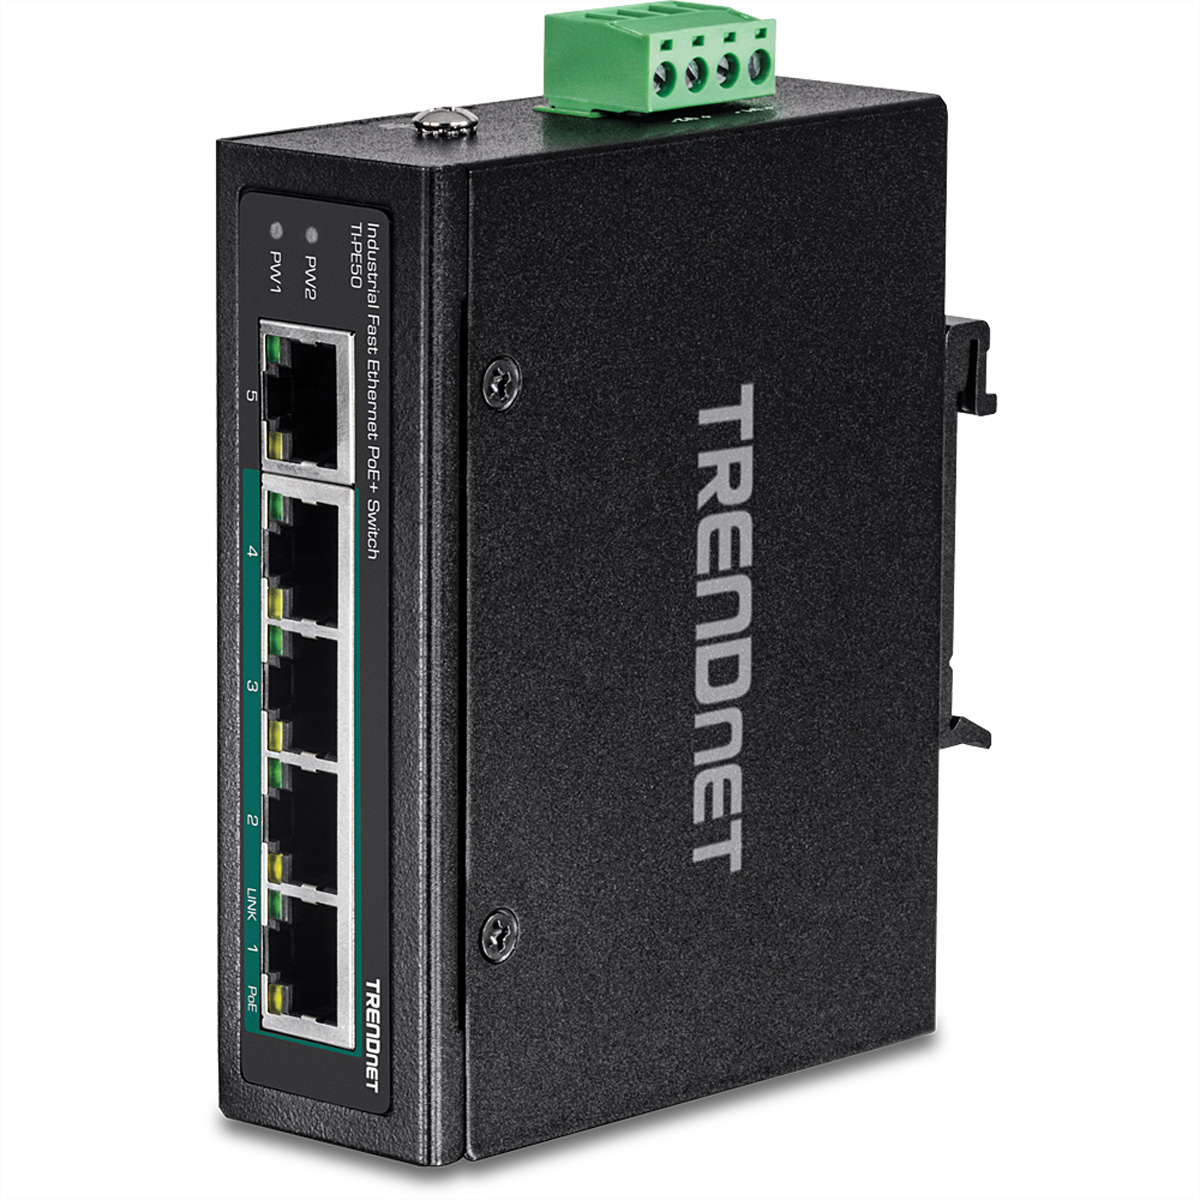 TRENDNET TI-PE50 DIN-Rail Ethernet Gigabit PoE+ Fast Switch 5-Port PoE Industrial Switch